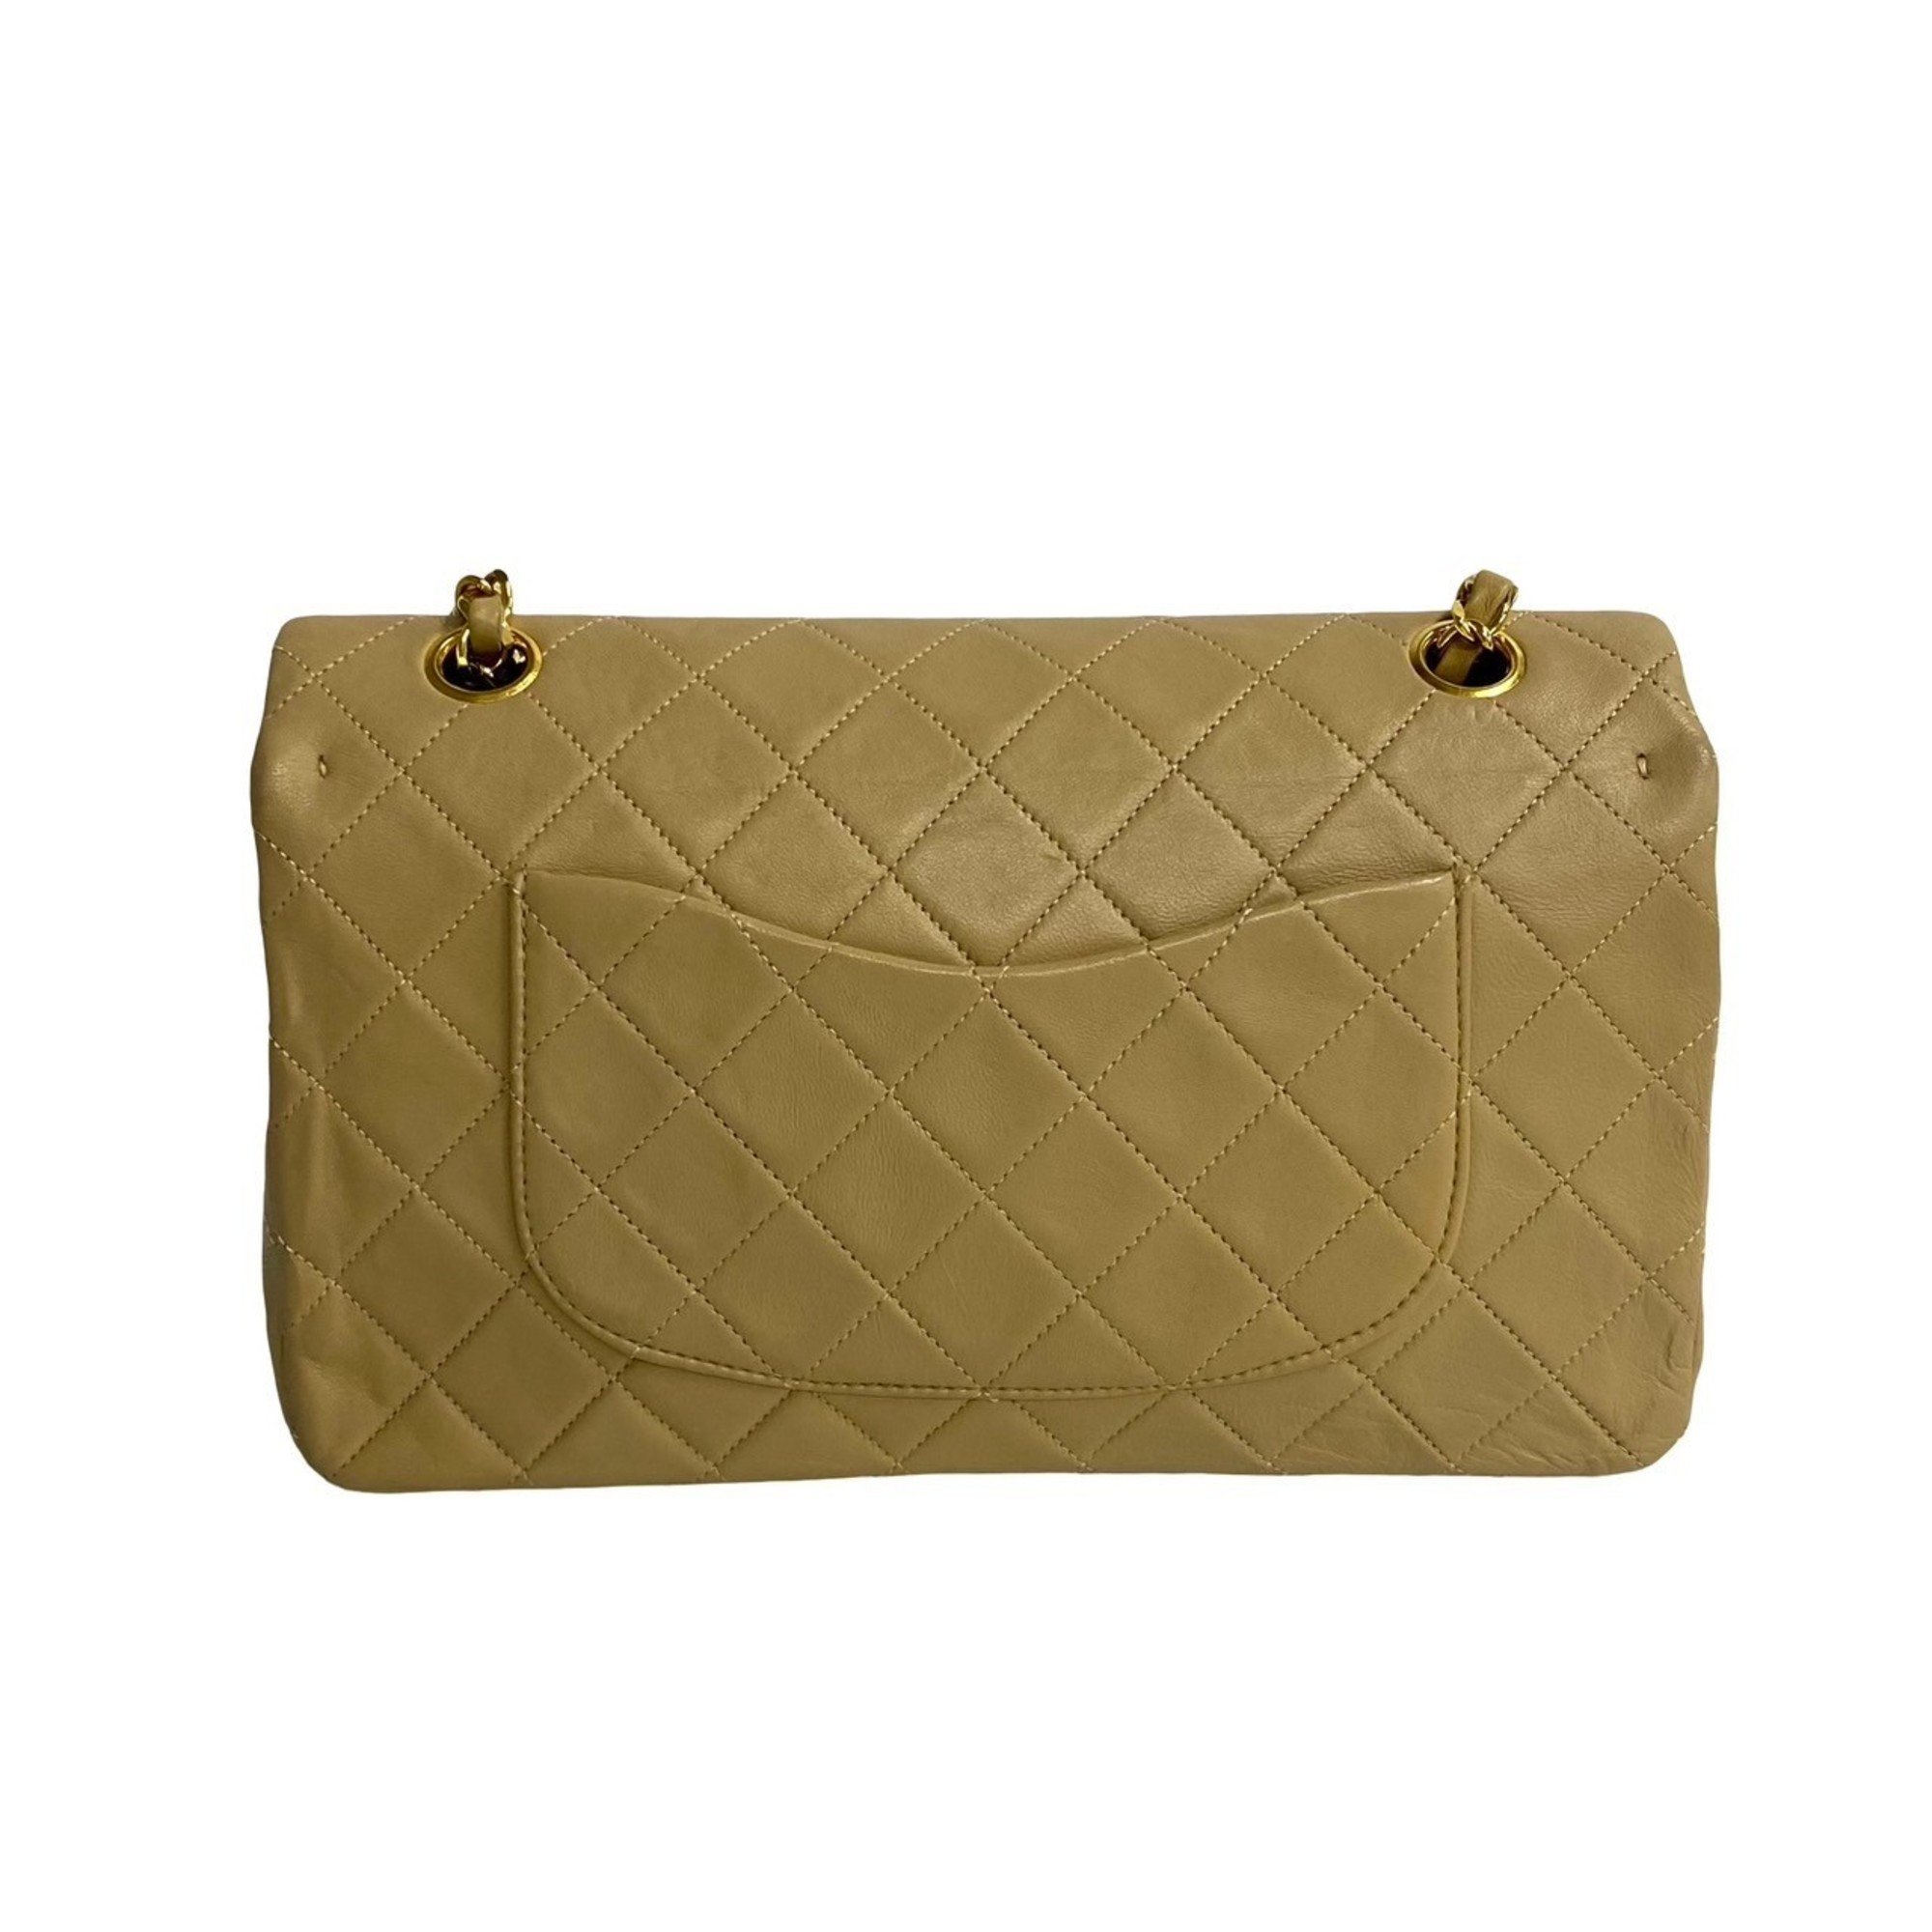 CHANEL Chanel Matelasse Double Flap 25cm Leather Chain Handbag Beige 14514